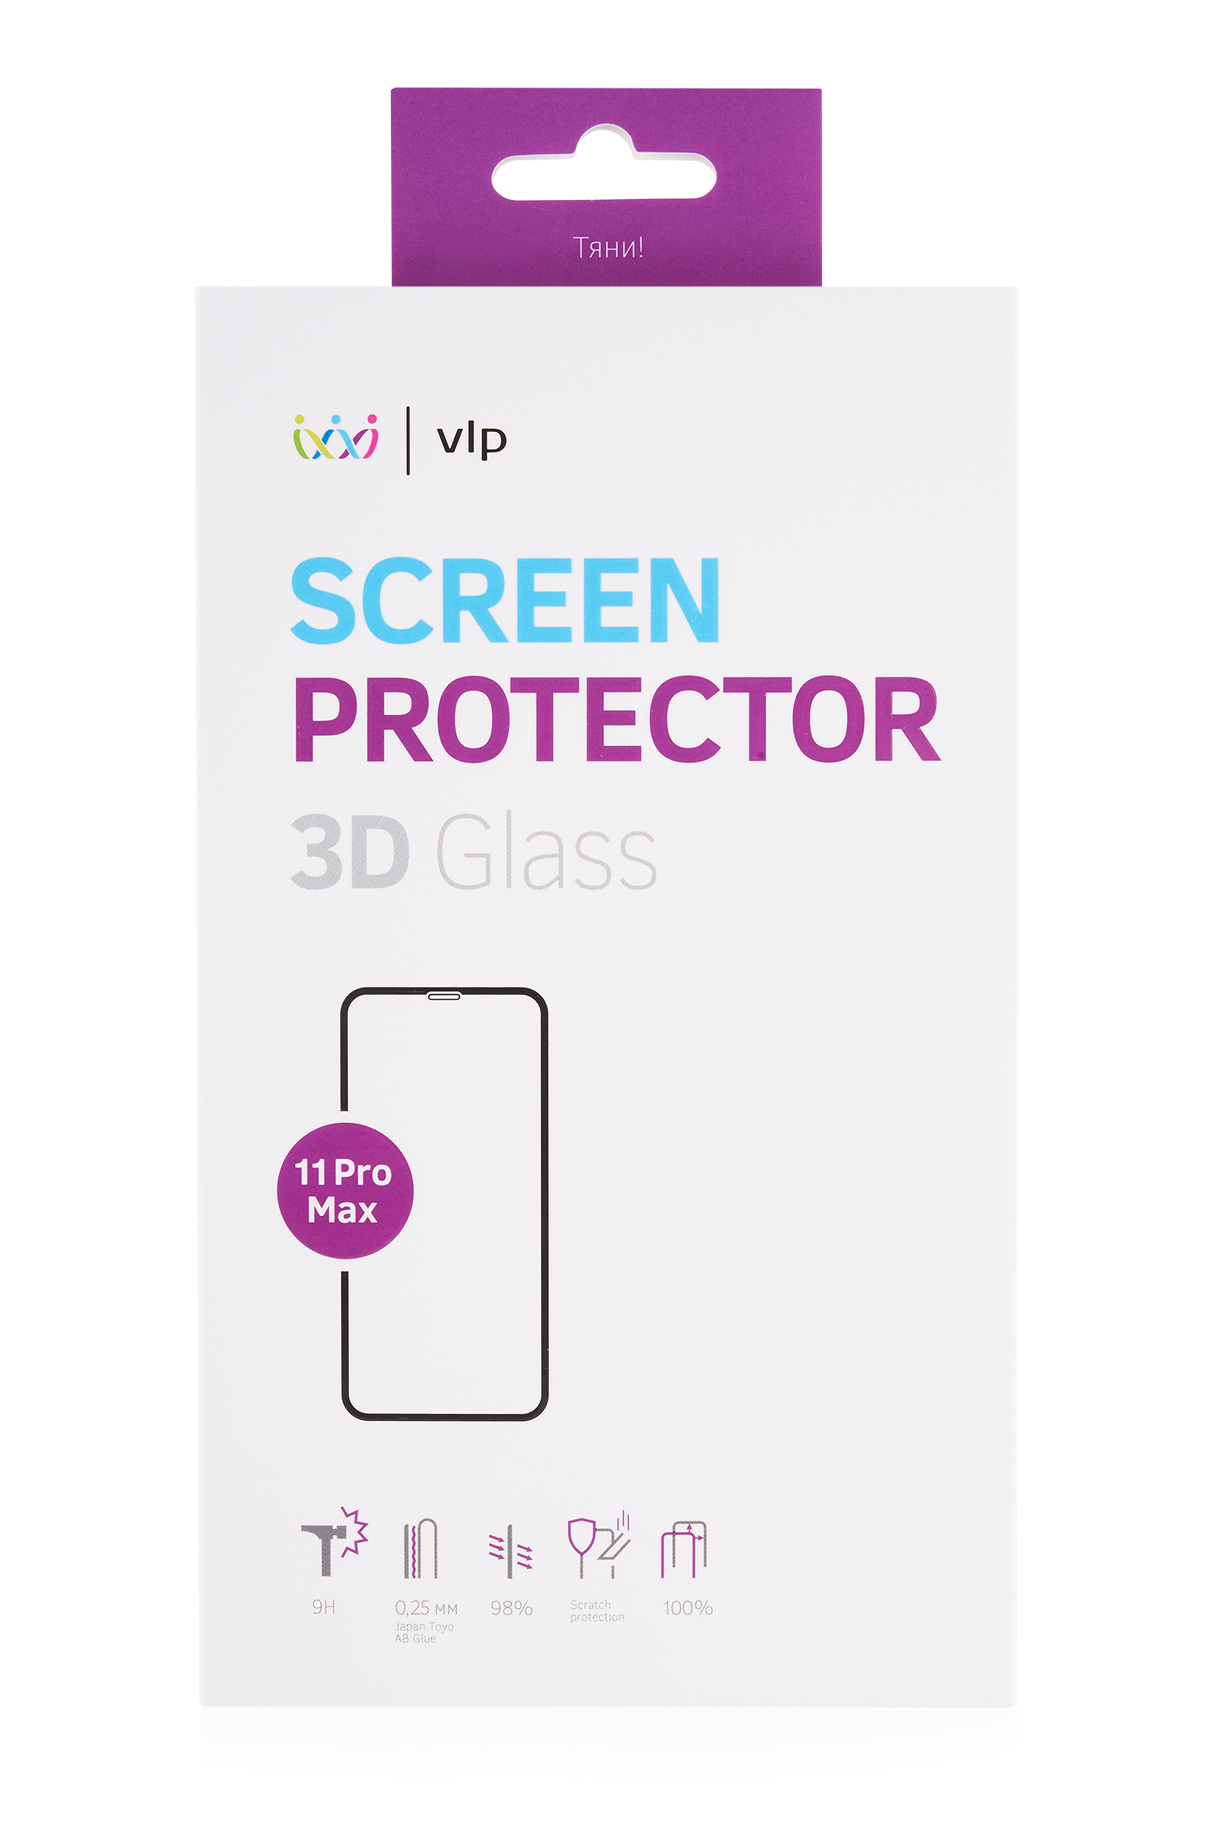 Стекло 3D защитное VLP для iPhone 11 ProMax/XsMax, олеофобное, с черной рамкой стекло 3d защитное vlp для iphone 11 promax xsmax олеофобное с черной рамкой